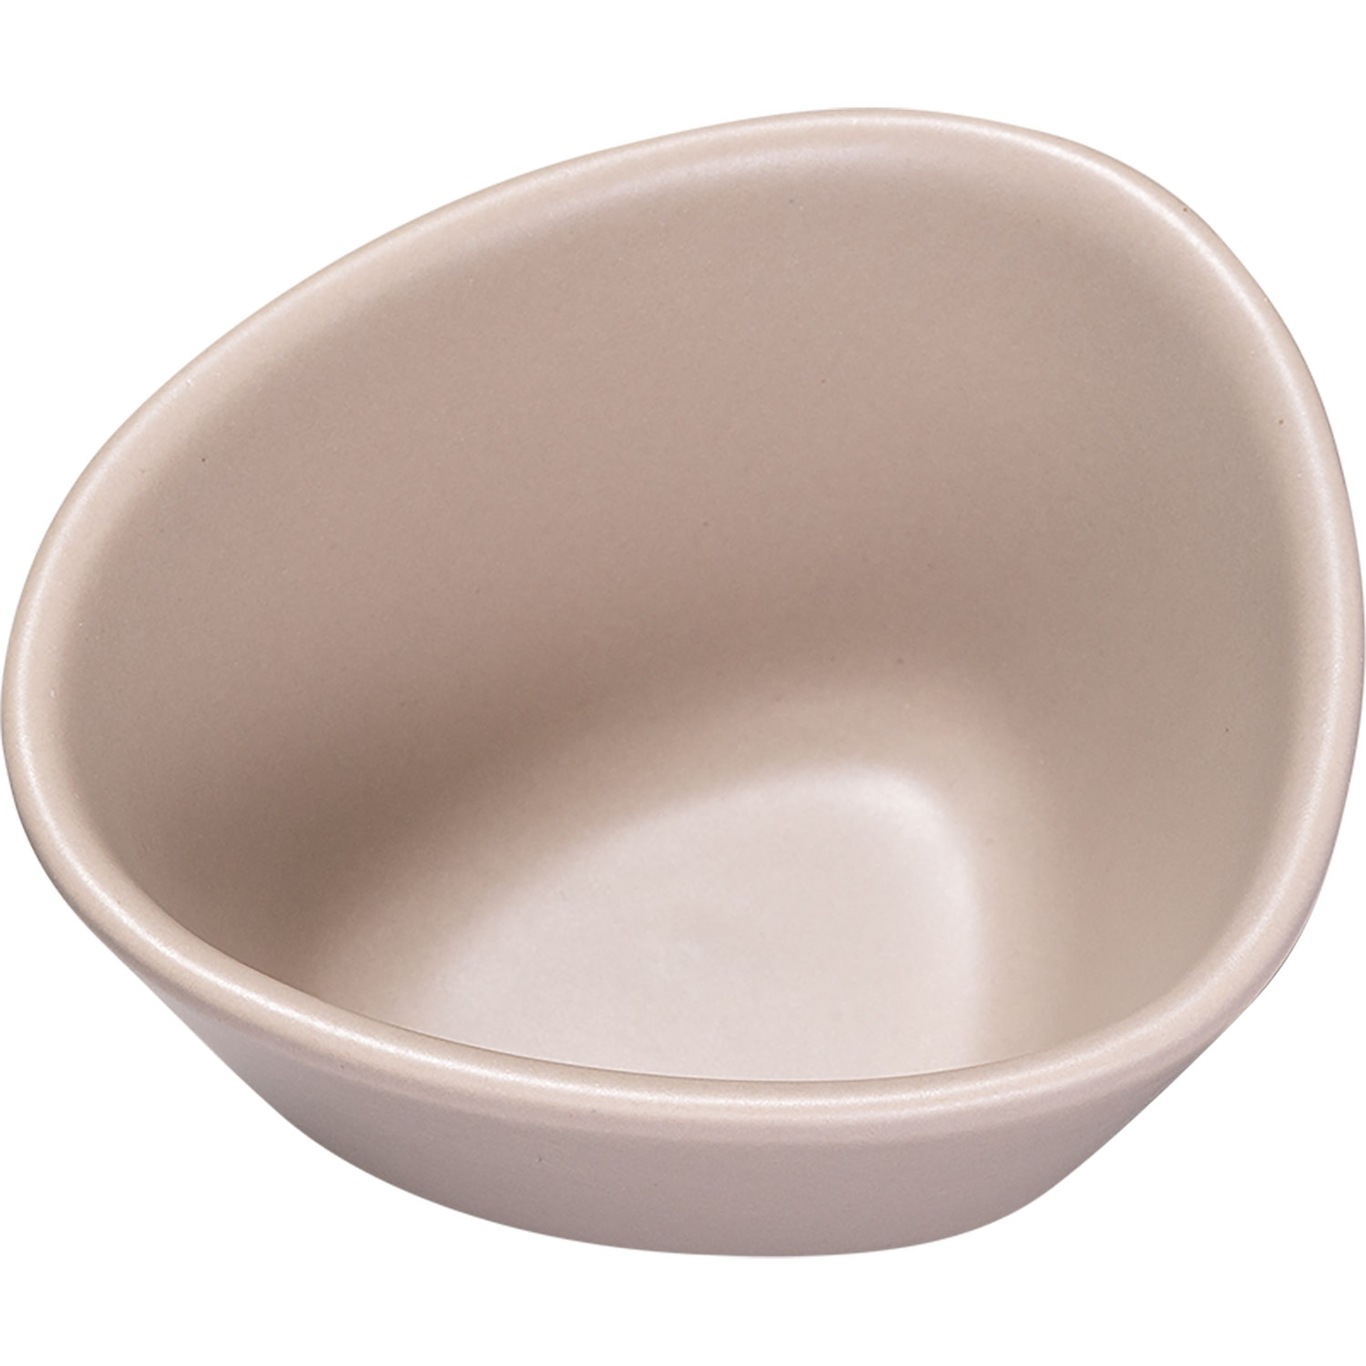 Stoneware Bowl 11x10 cm, Sand